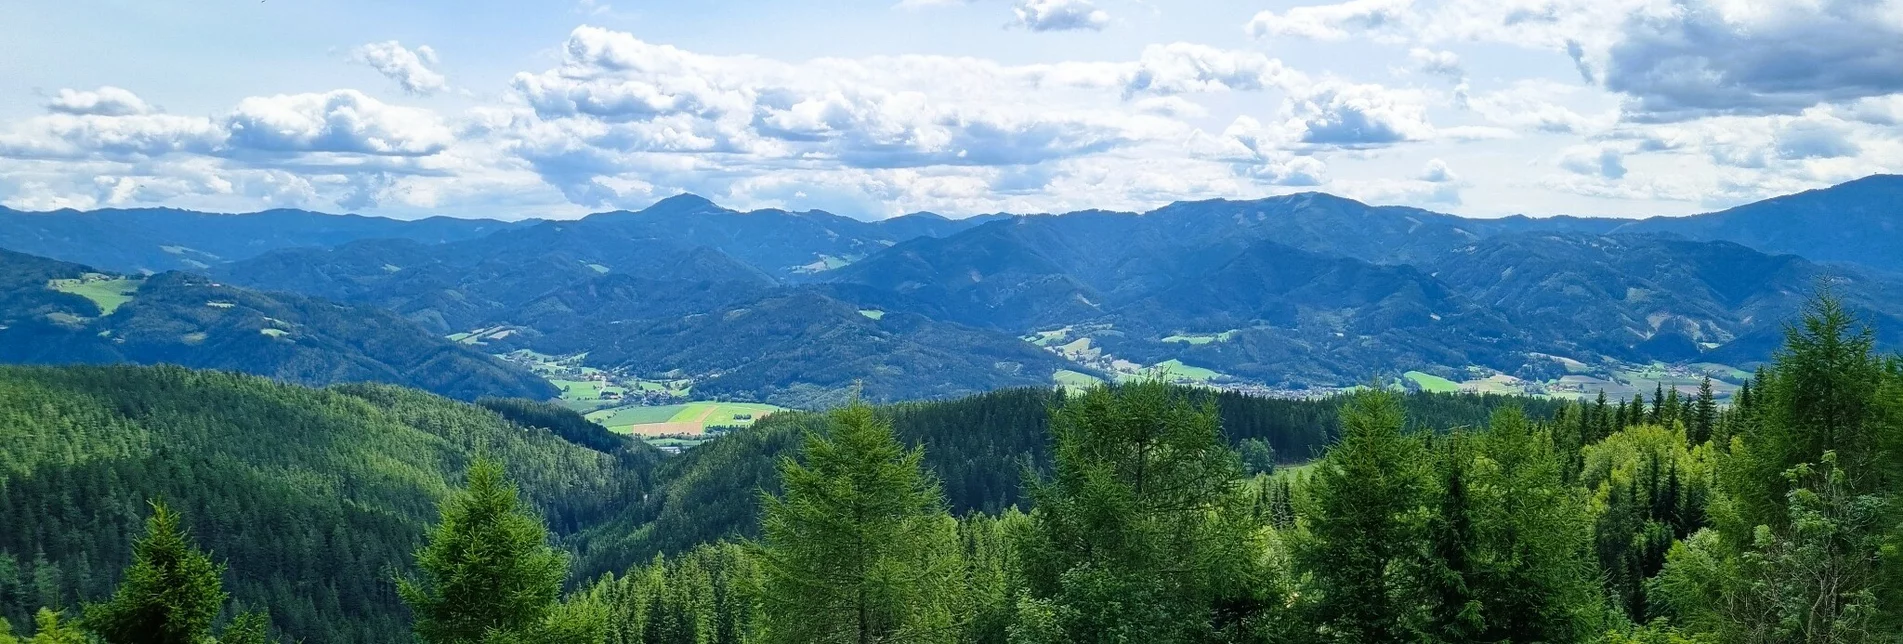 Hiking route Große Herzogbergrunde - Touren-Impression #1